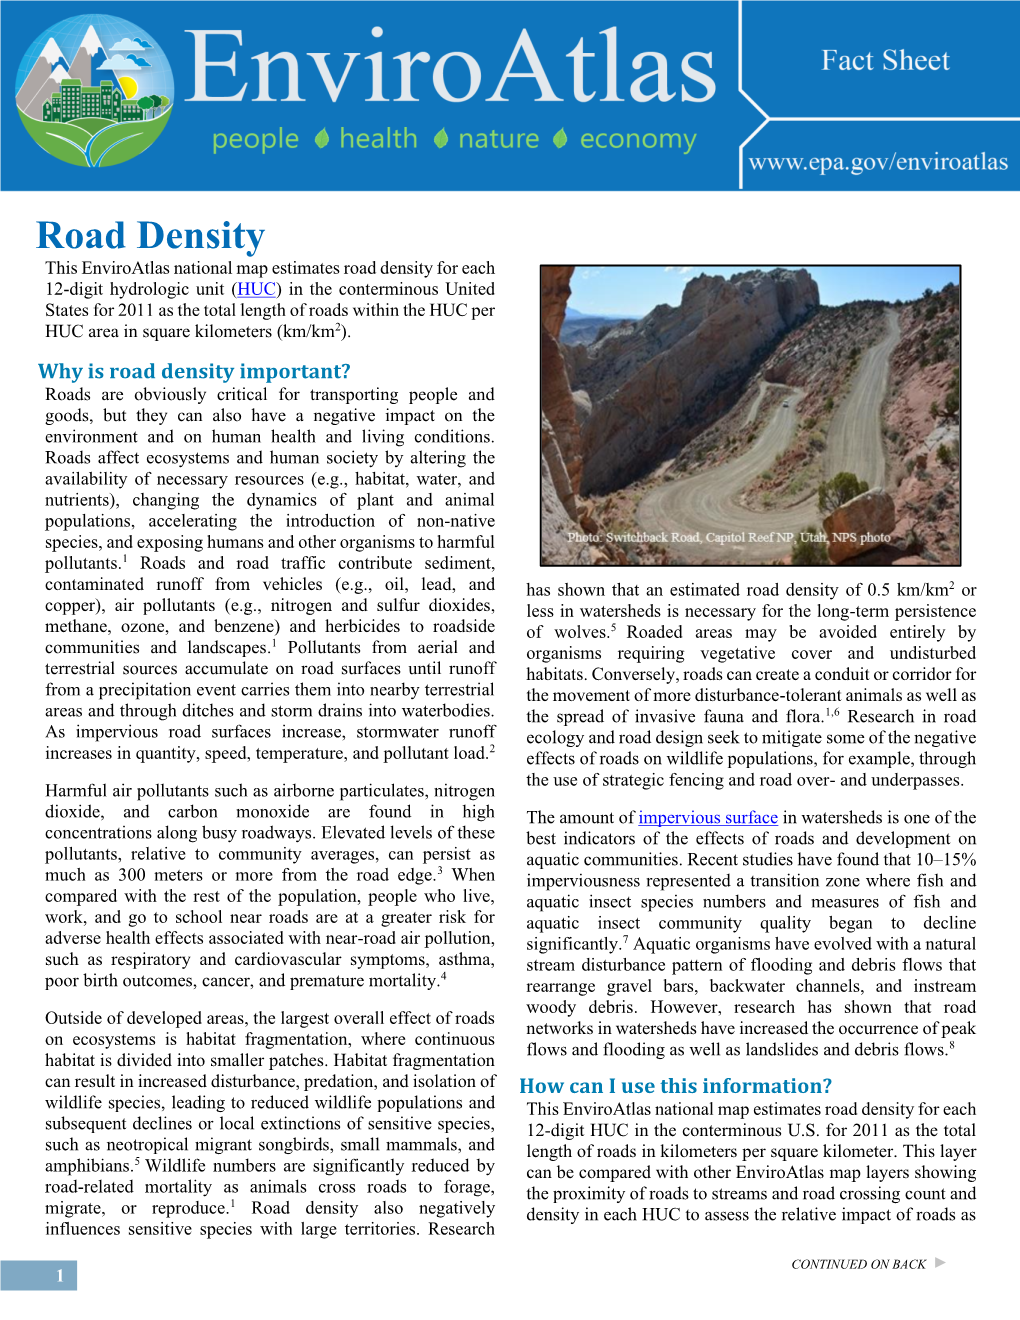 Road Density, Enviroatlas National Data Fact Sheet, March 2020